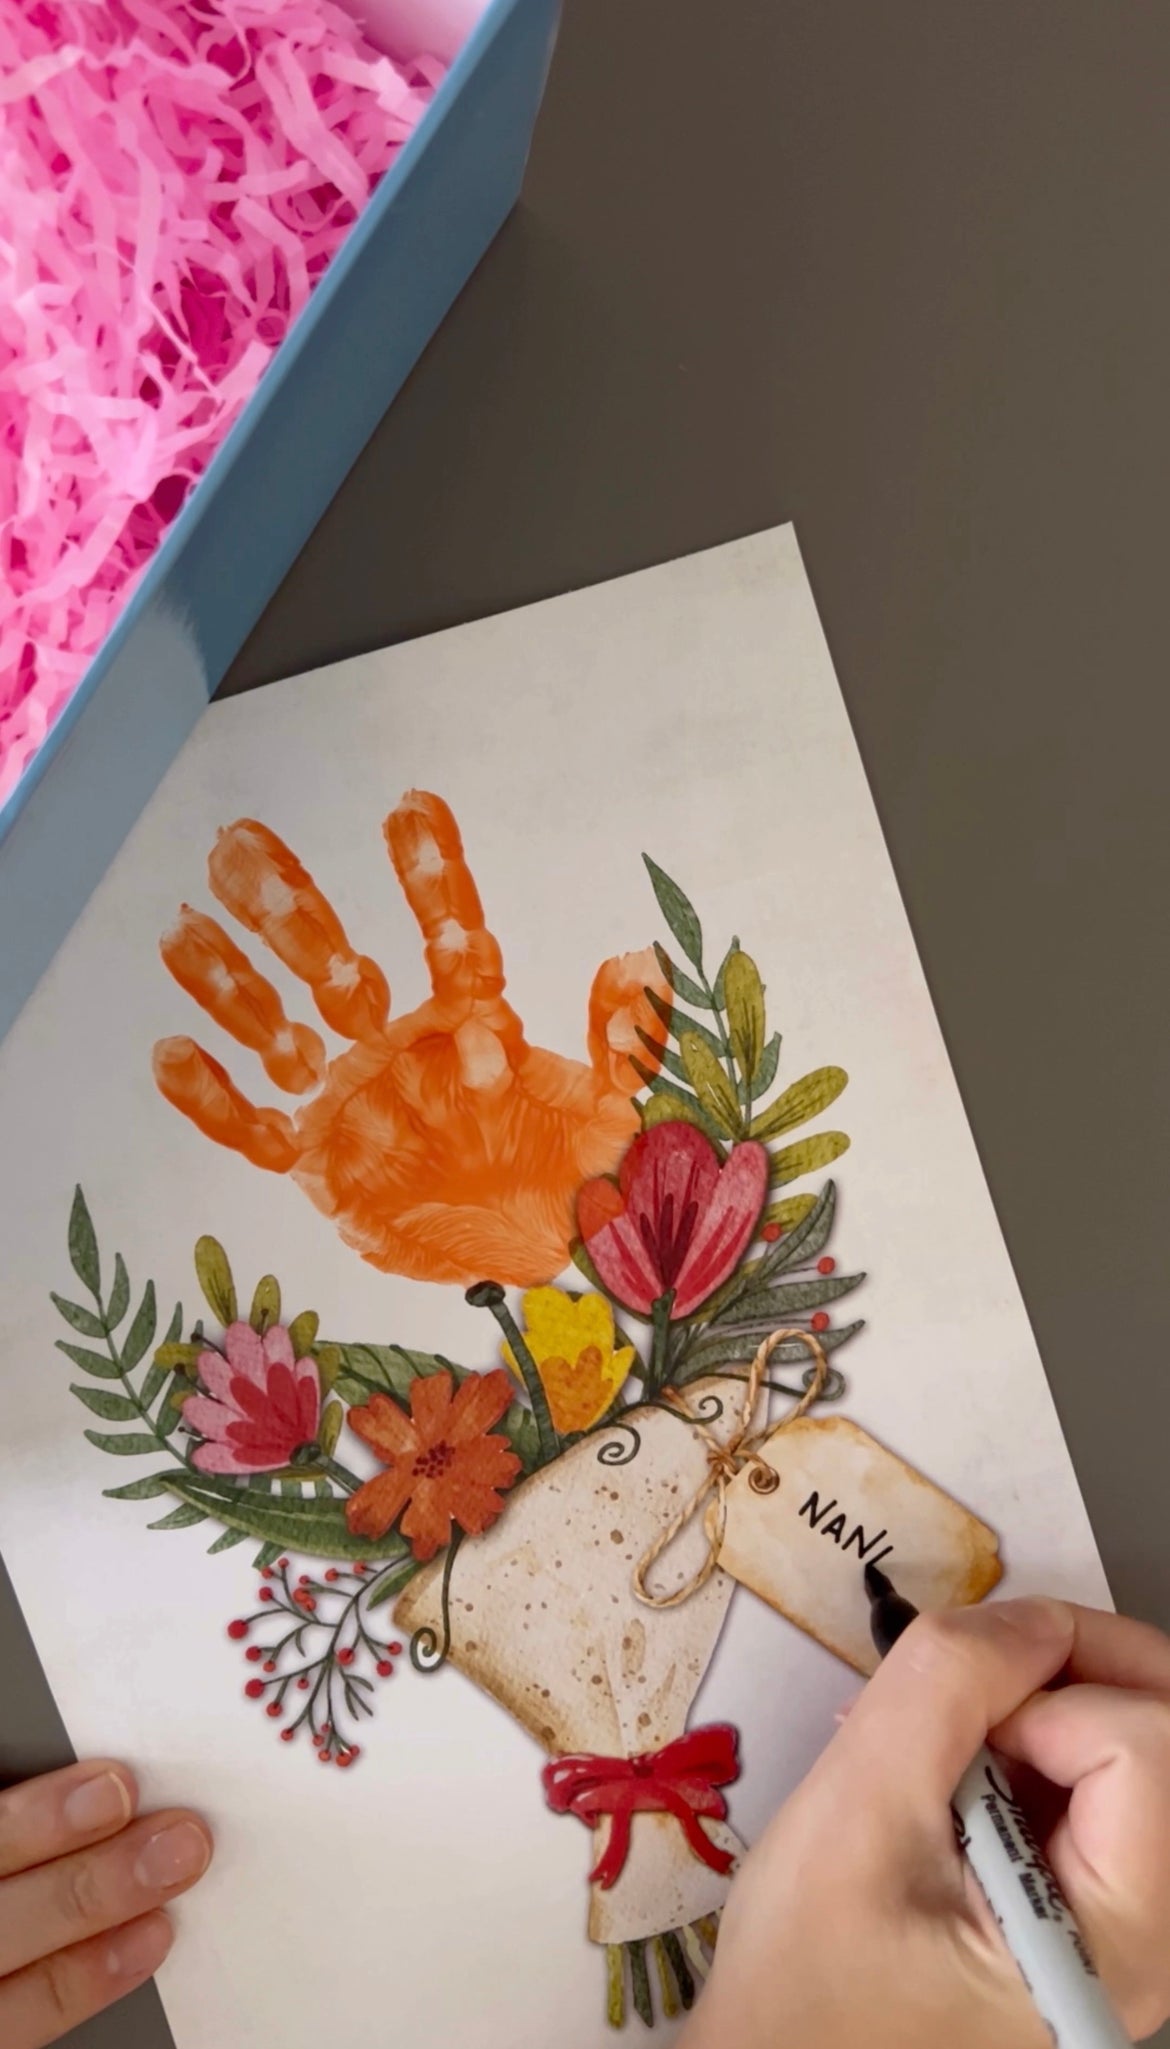 Handprint Footprint Craft Art / Flower Bunch / Mom Mum Mothers Day / Kids Baby Toddler Child / Activity Gift Card DIY / Print it off